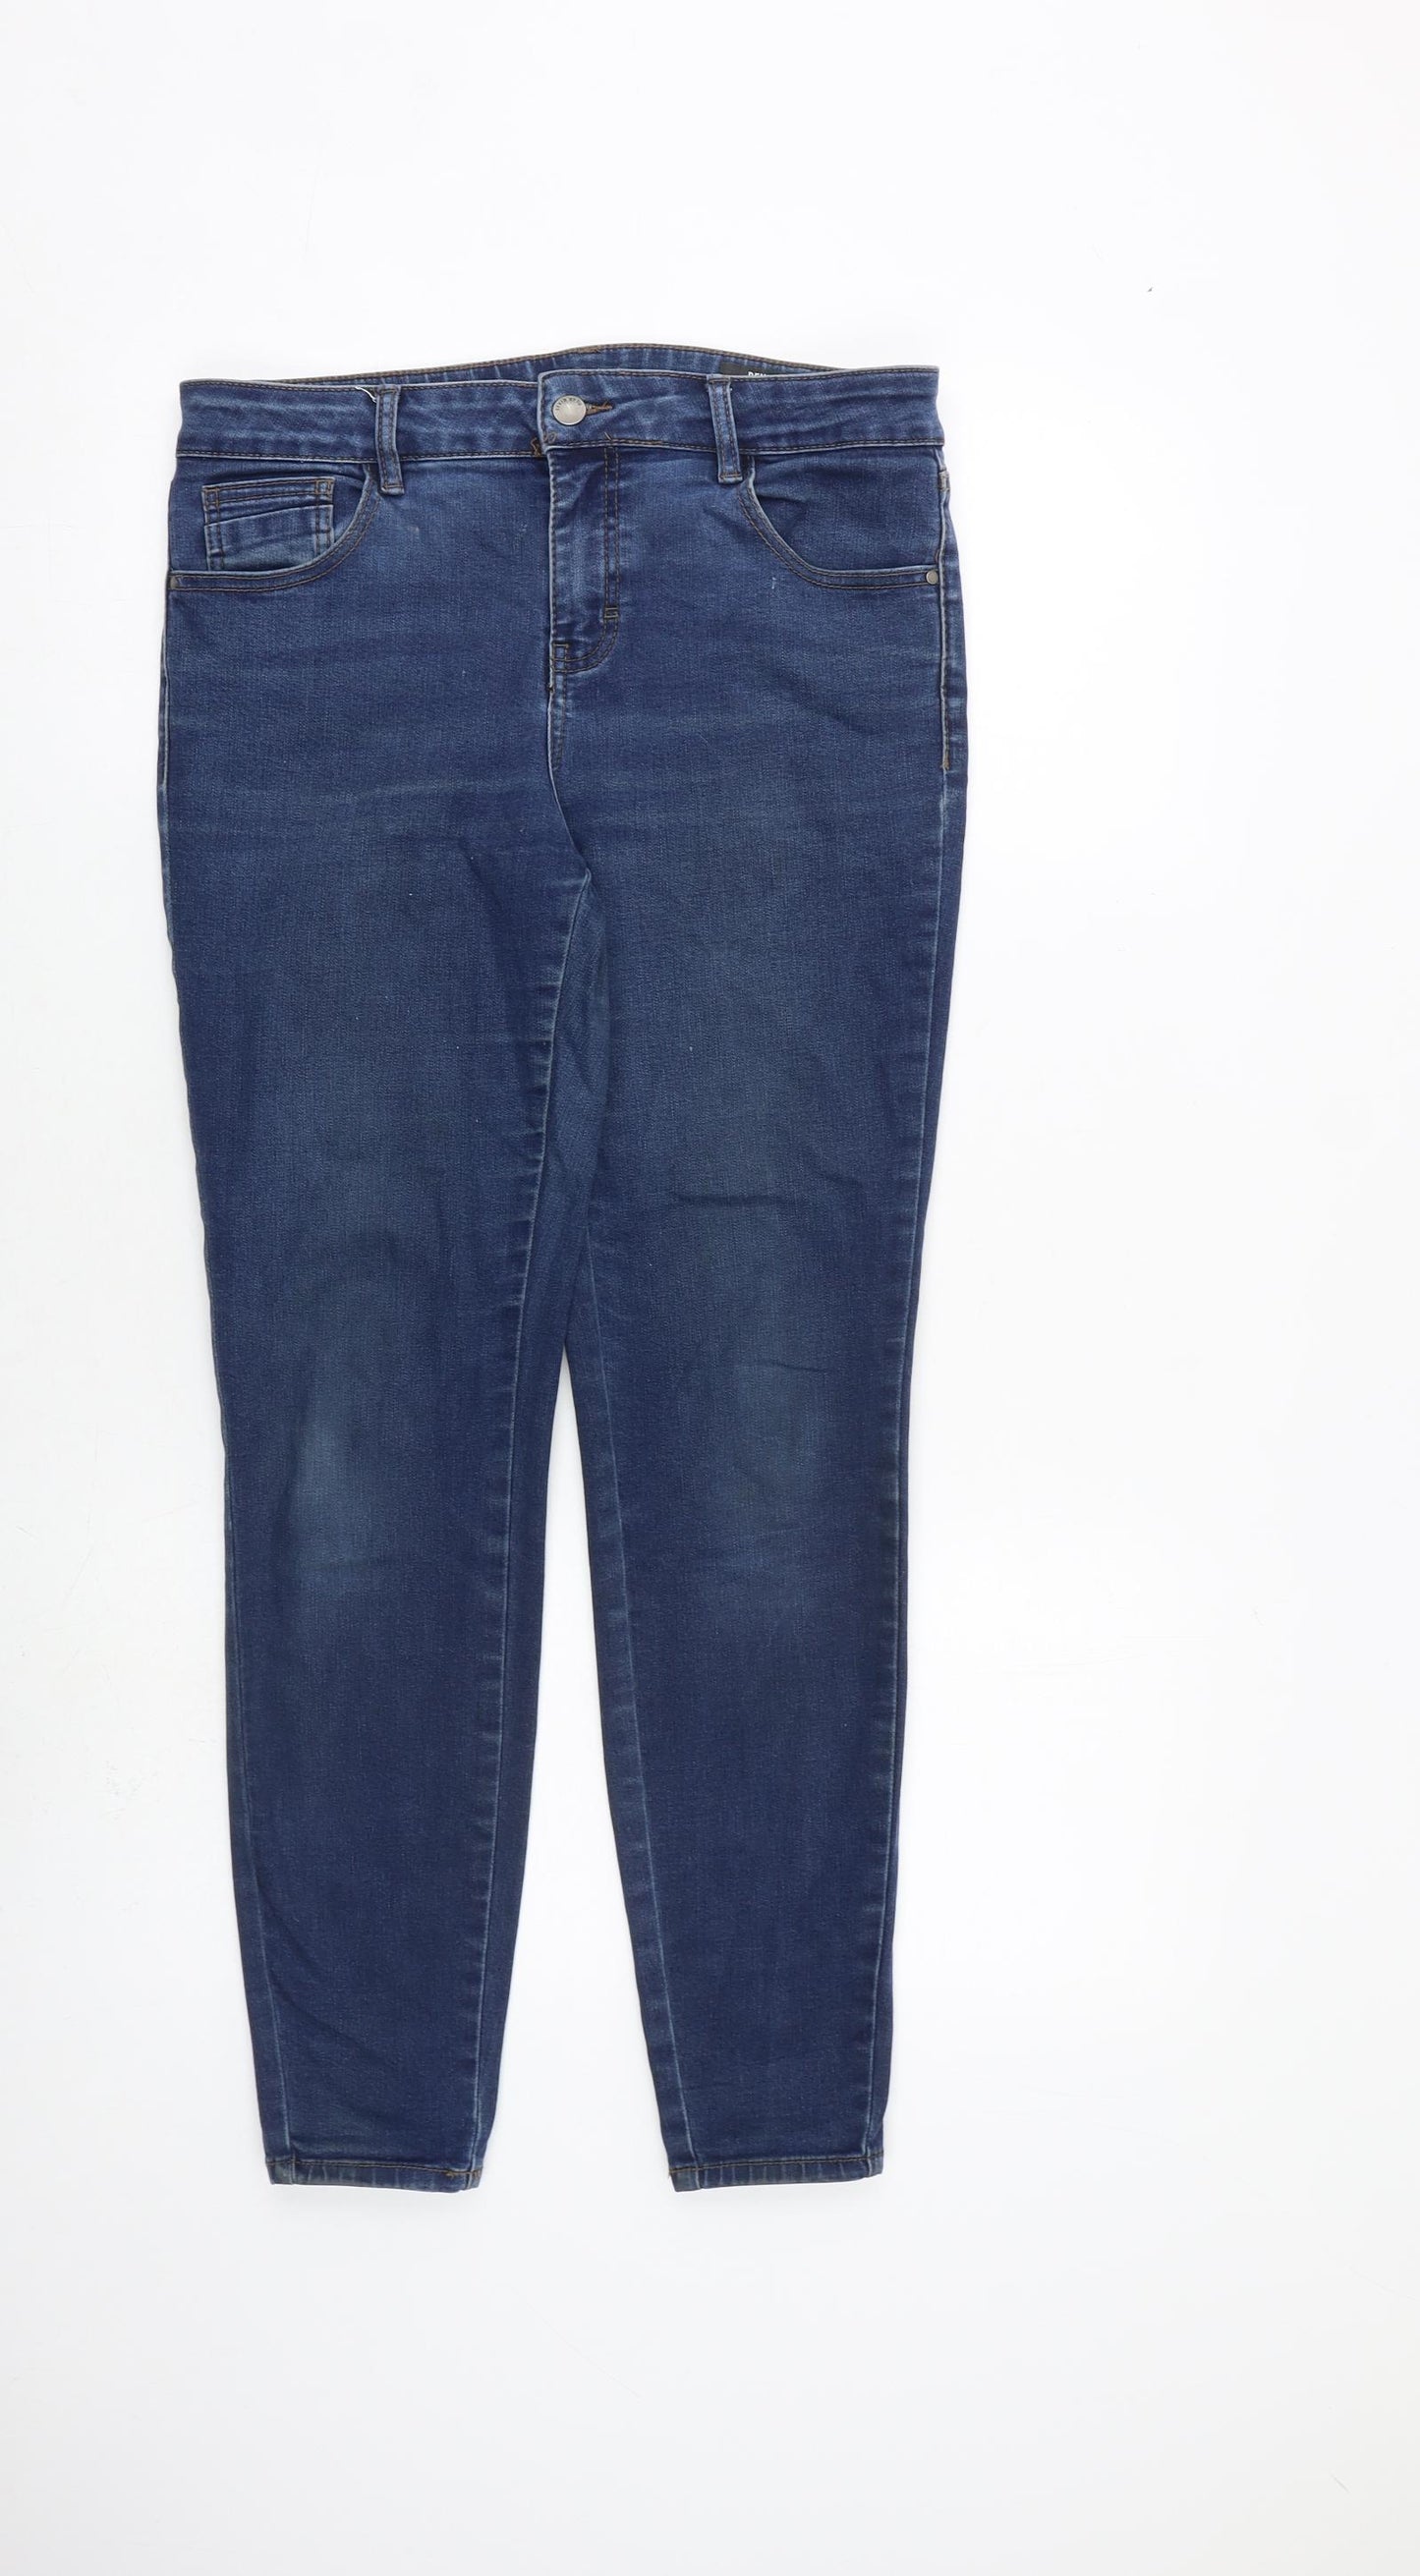 TU Womens Blue Cotton Skinny Jeans Size 12 L28 in Slim Zip